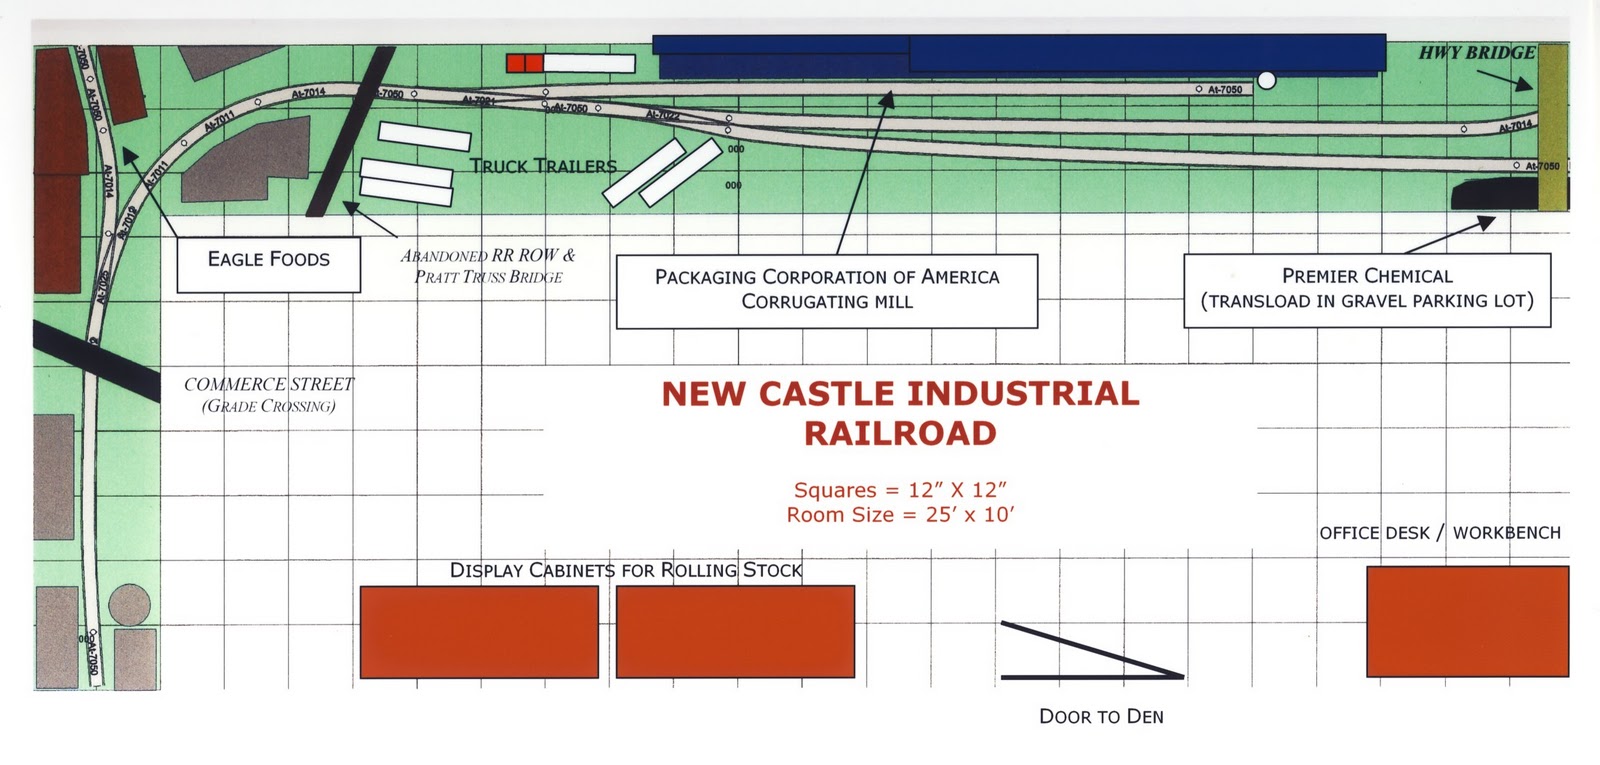  Model Train DCC Wiring Diagrams additionally N Scale Model Railroad